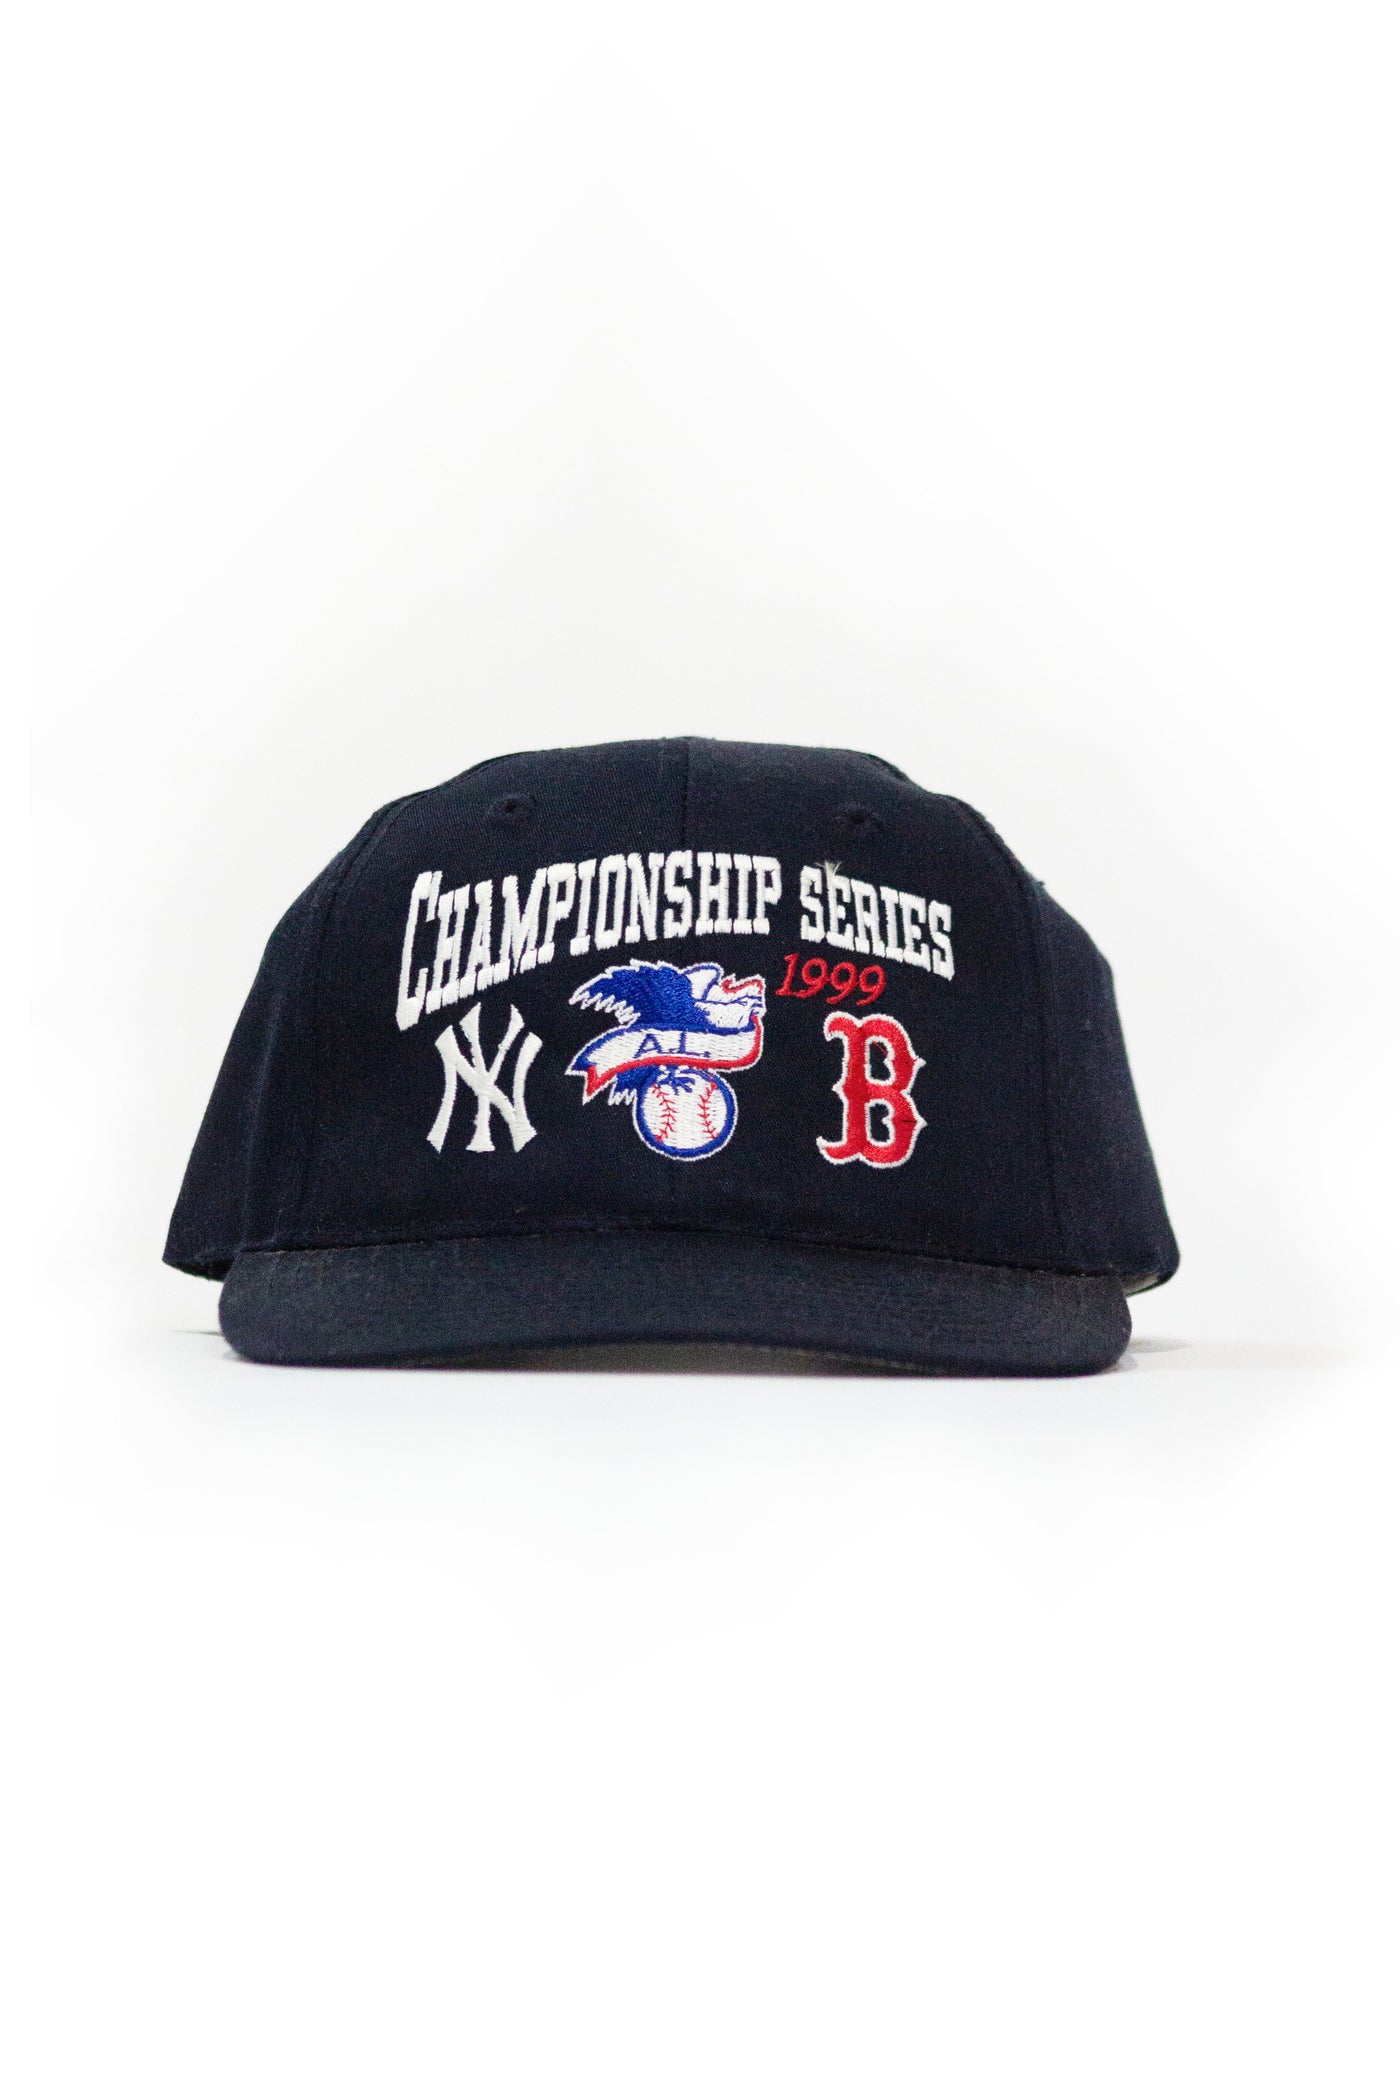 Vintage 1999 Yankees Red Sox AL Championship Series Snapback